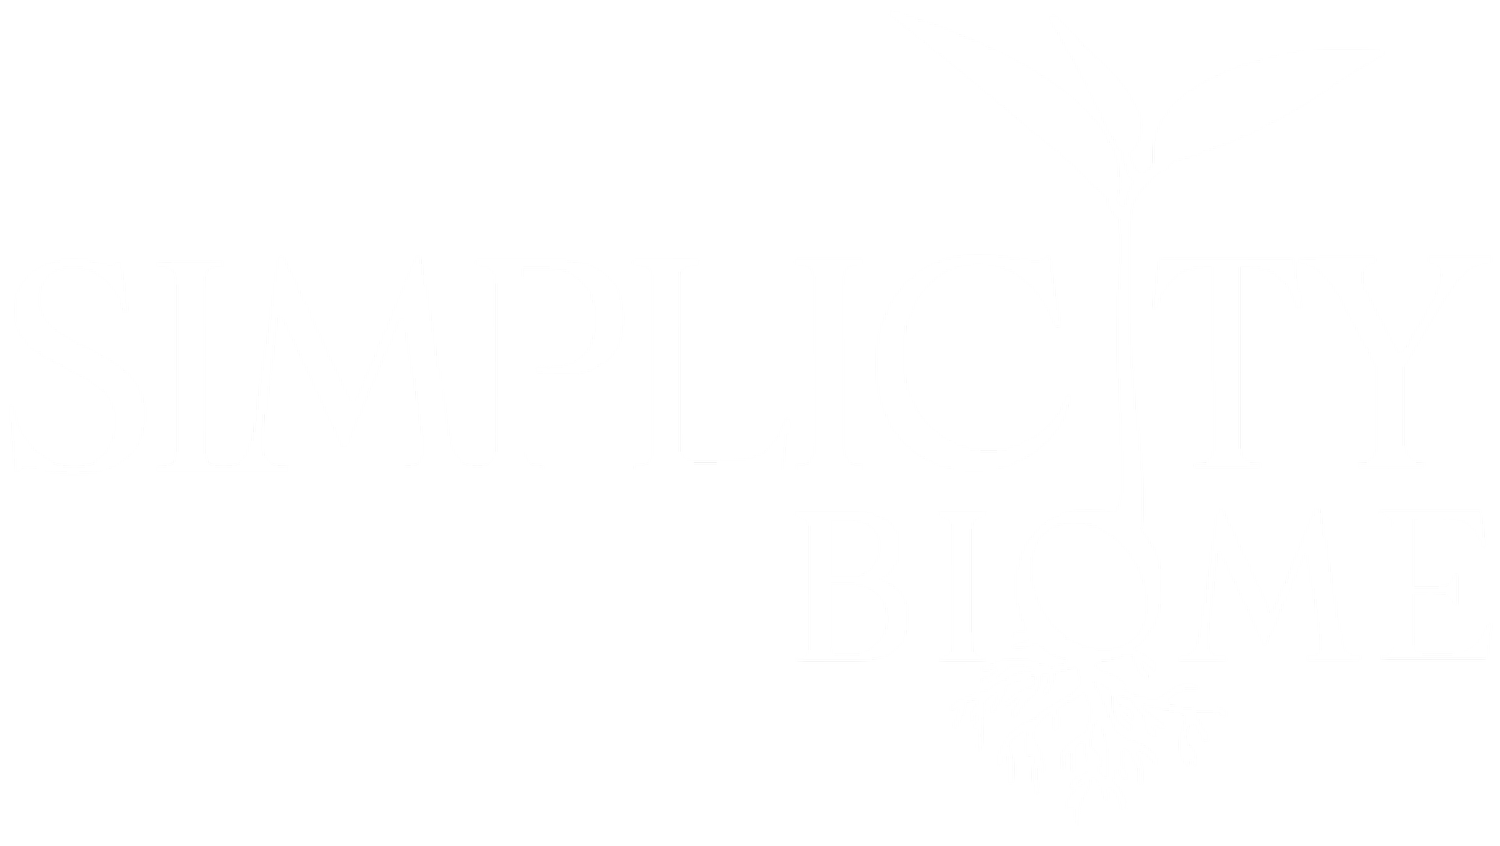 Simplicity Biome